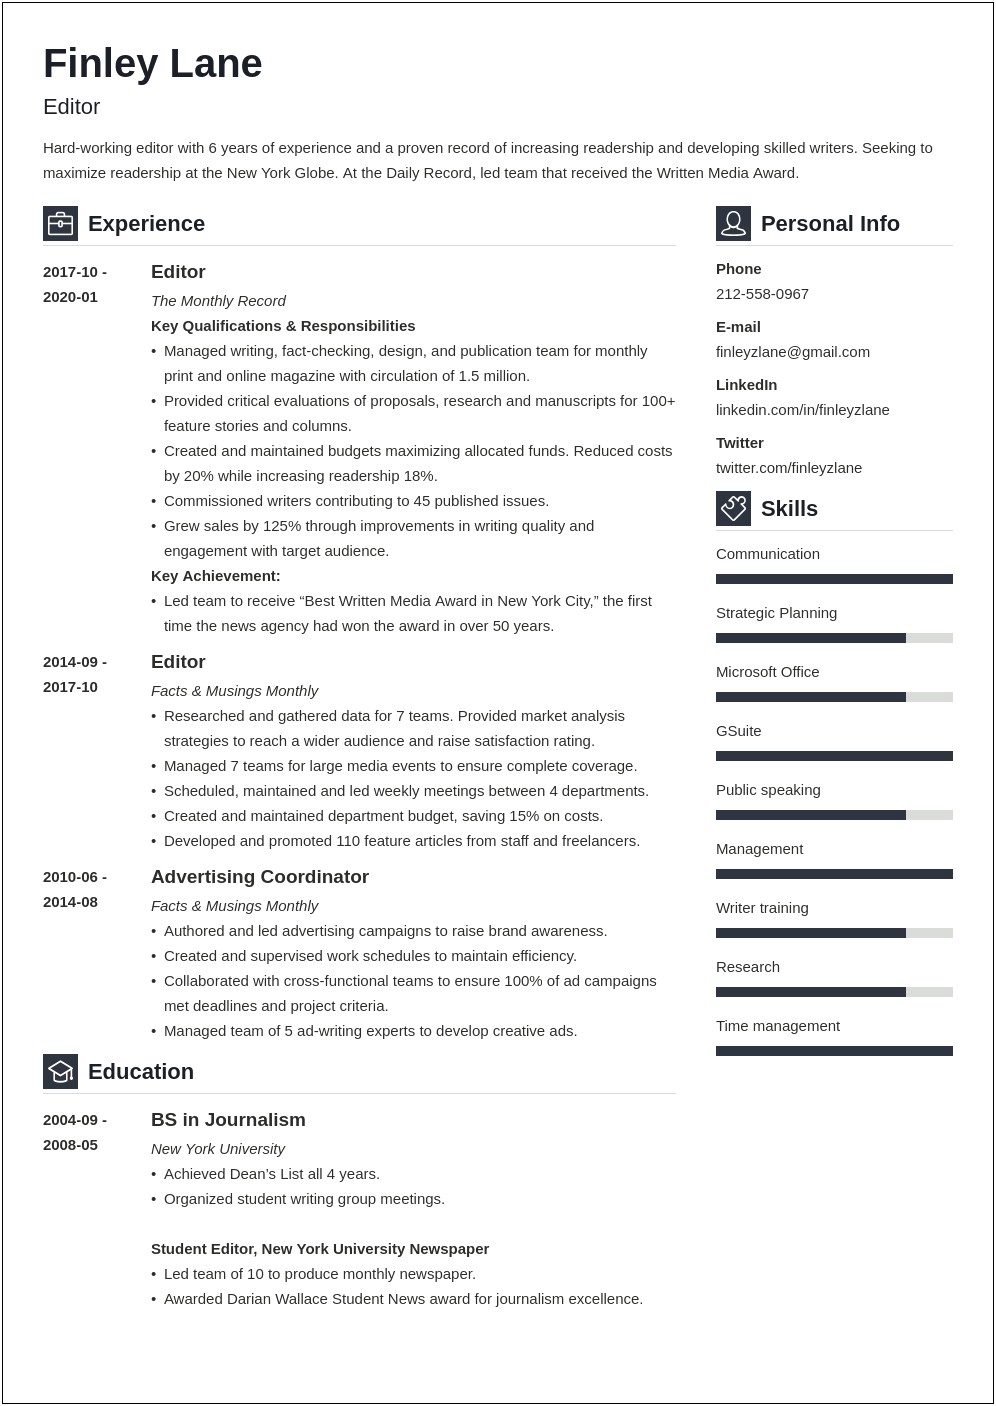 Resume Summary For Editingn Jobs